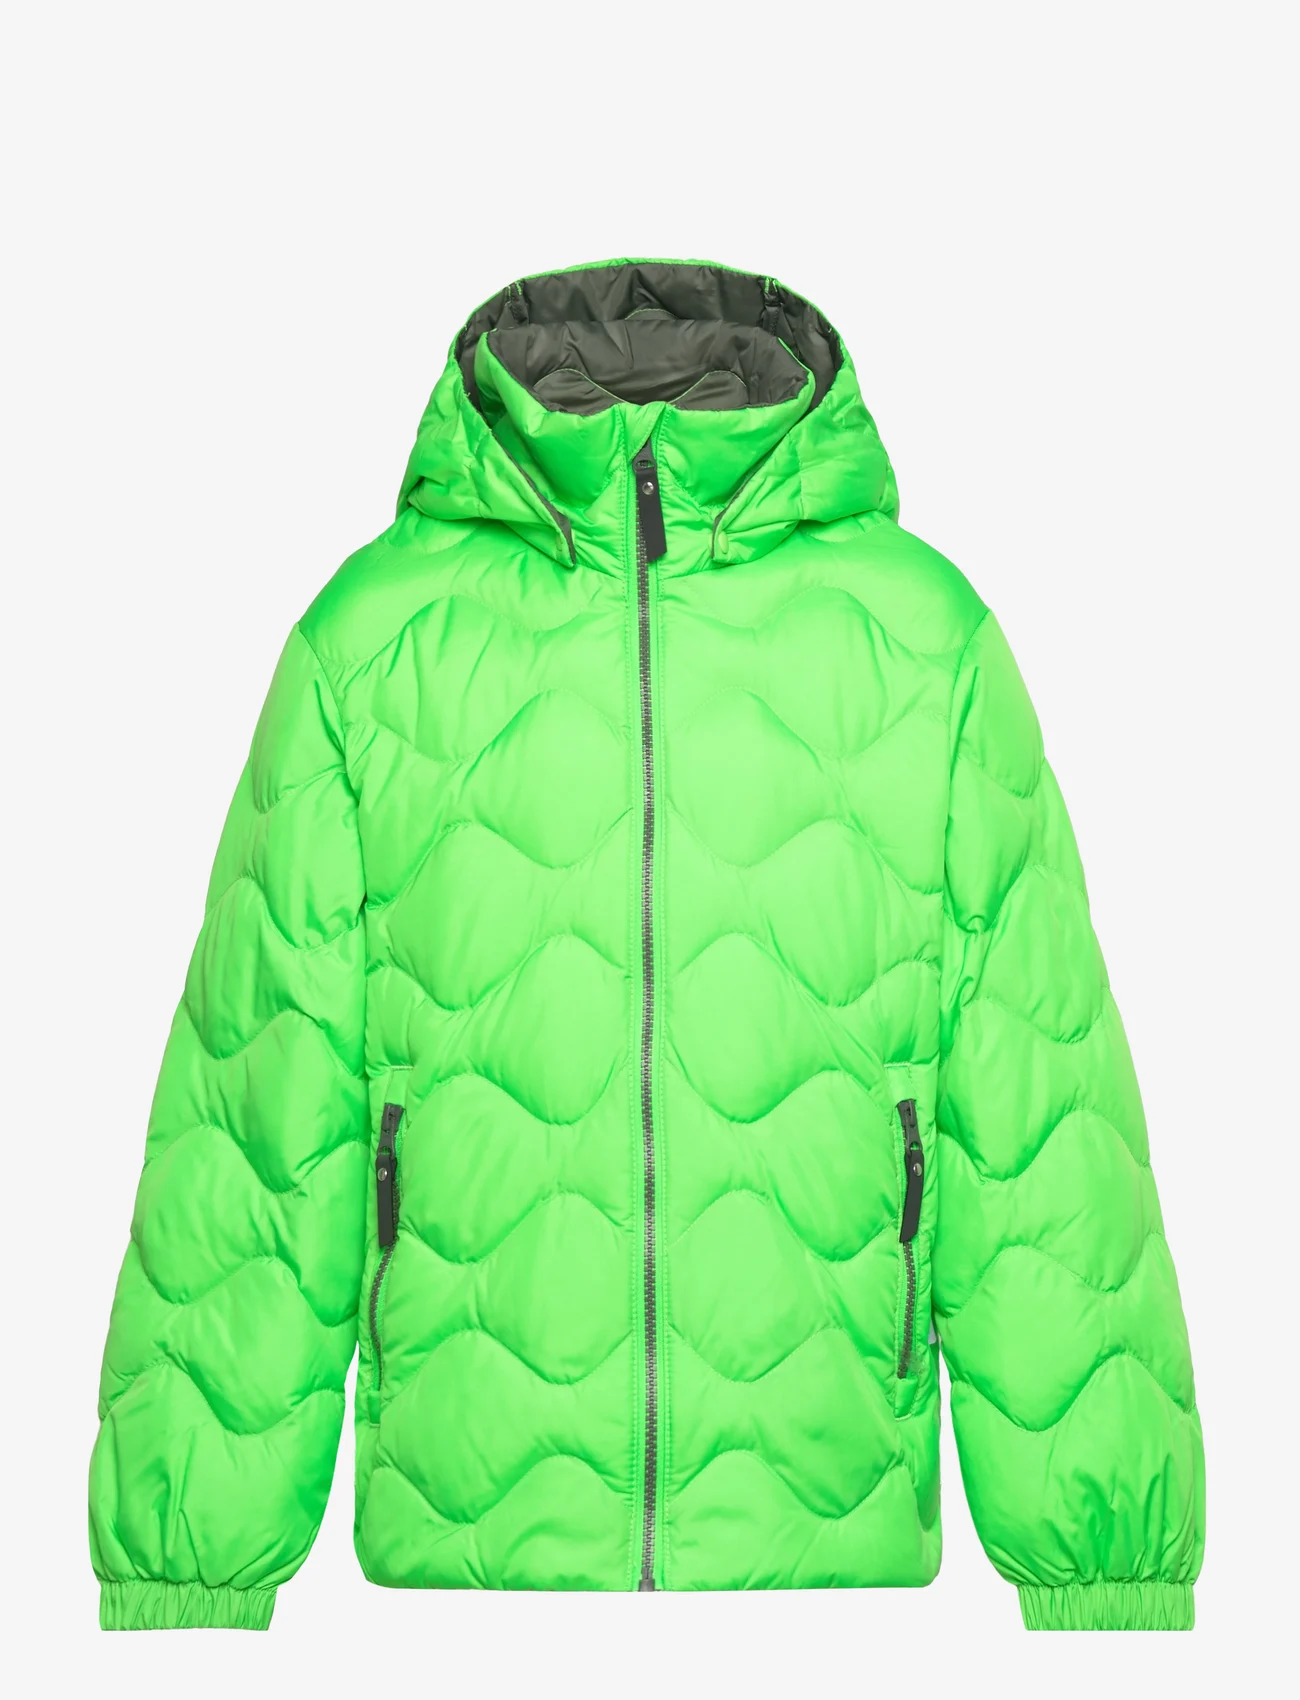 Reima - Kids' light down jacket Fossila - steppjacken - neon green - 0